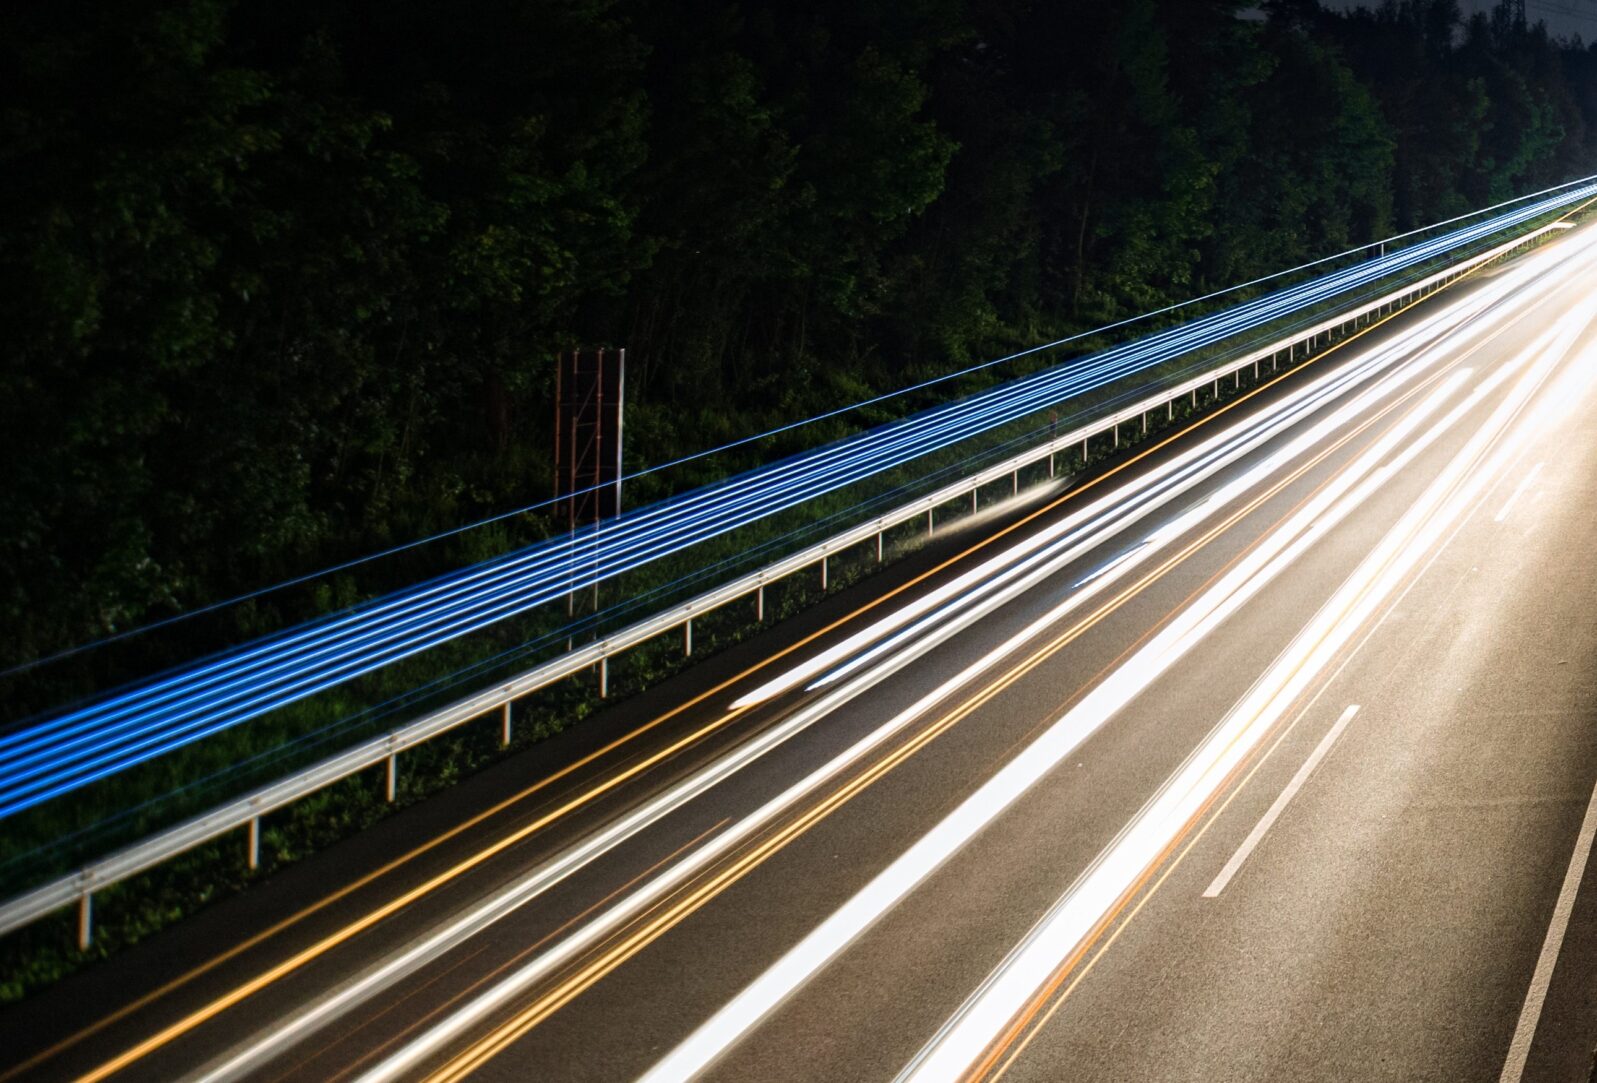 Light streak from vehicles on road at night